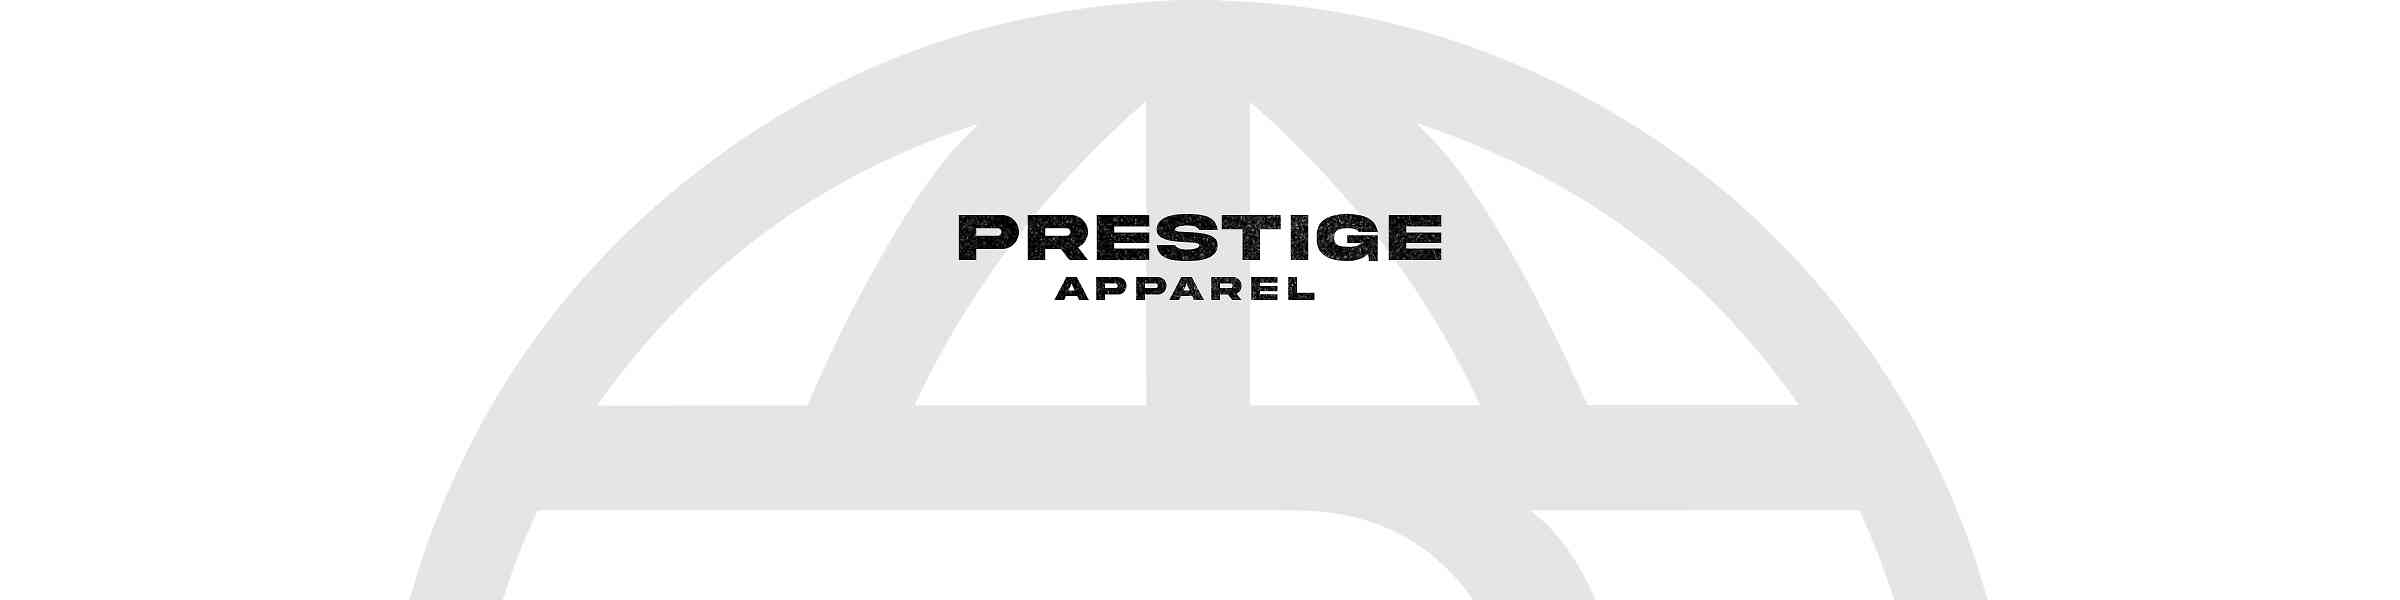 Resident Evil - Code Veronica – Prestige Merch Supply